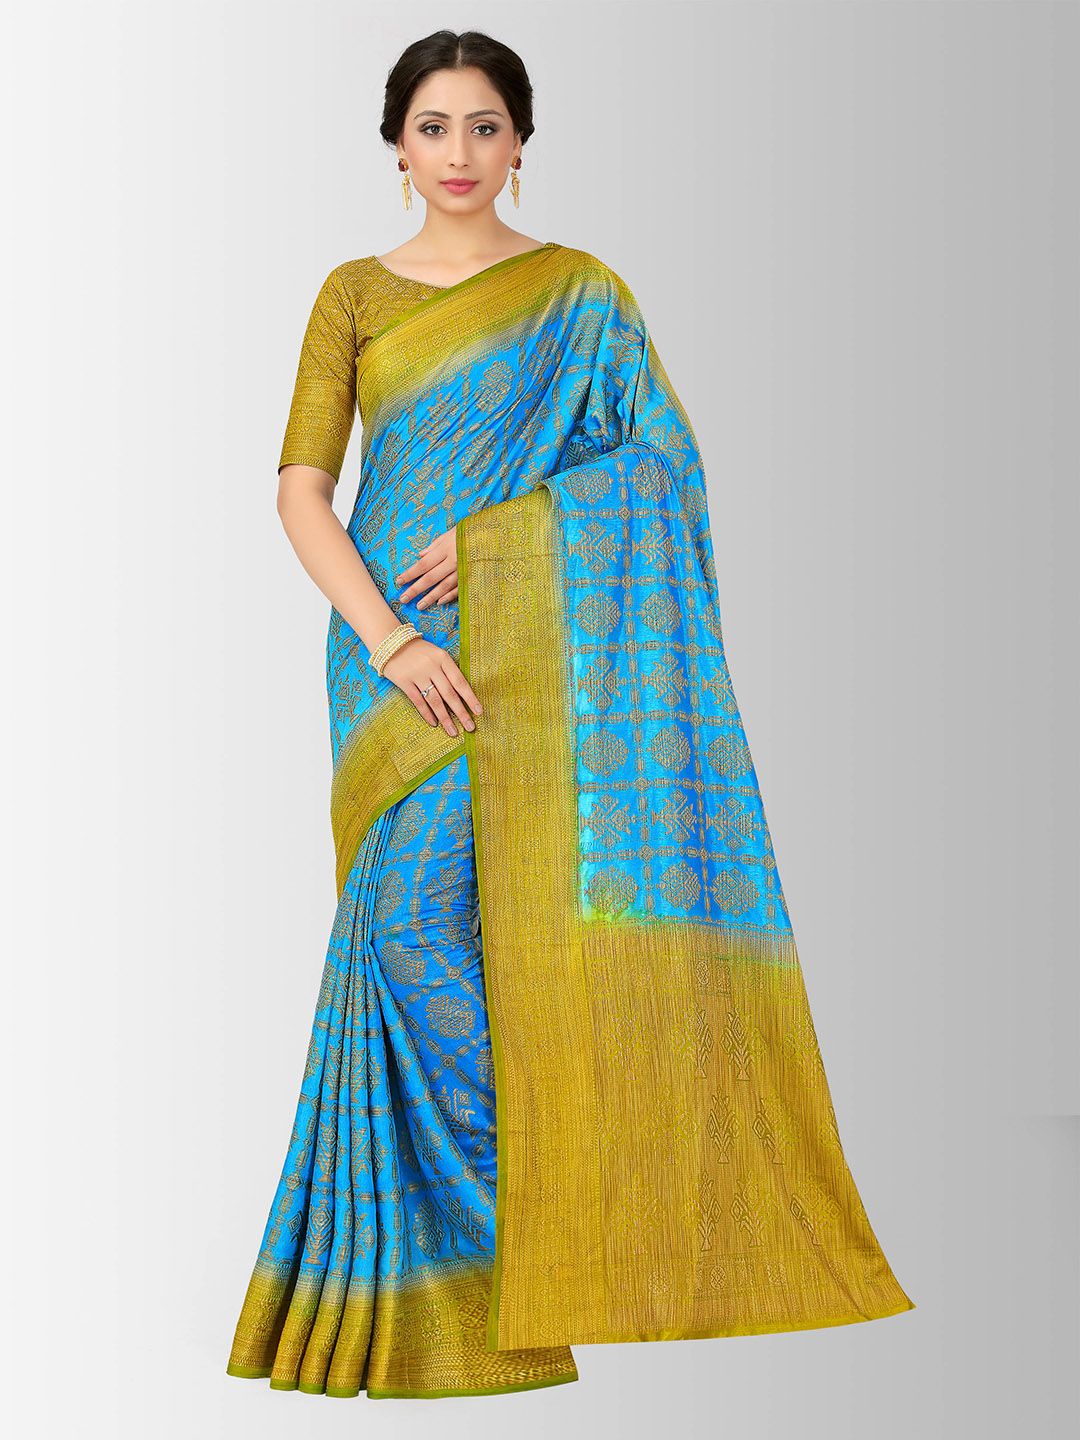 Women turquoise sarees - Buy Women turquoise sarees online in India